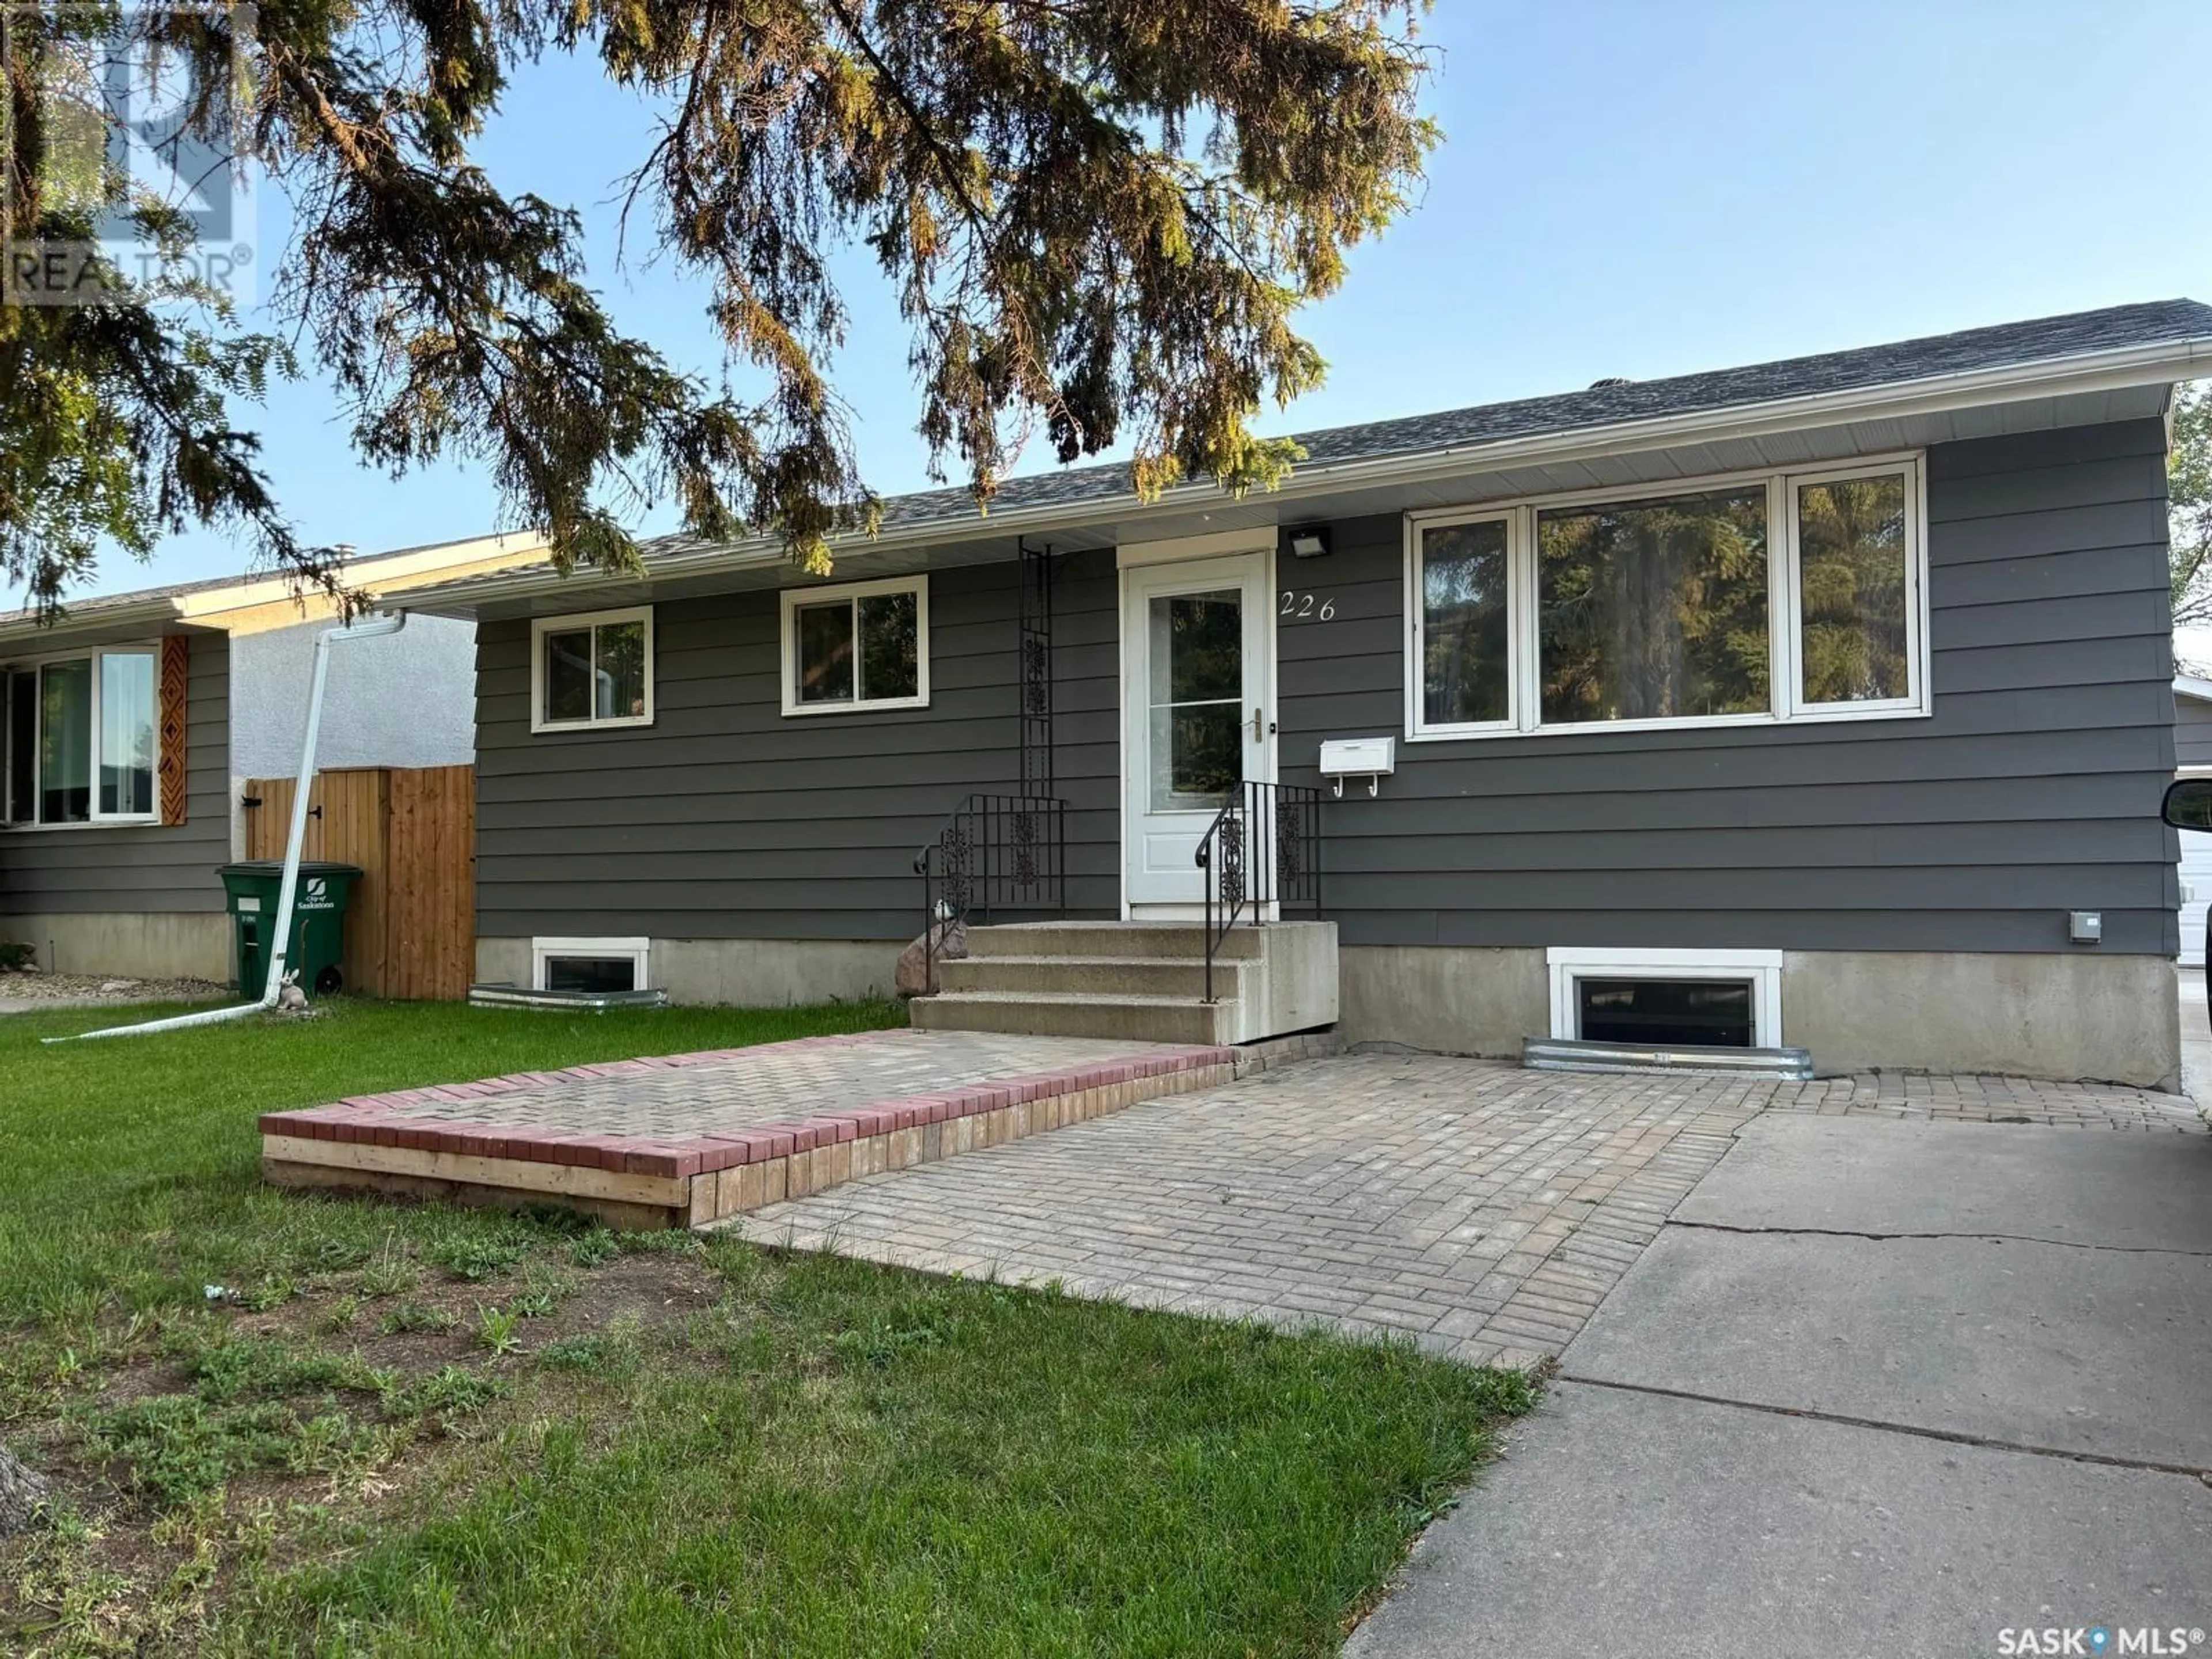 Home with vinyl exterior material for 226 Brock CRESCENT, Saskatoon Saskatchewan S7H4N4